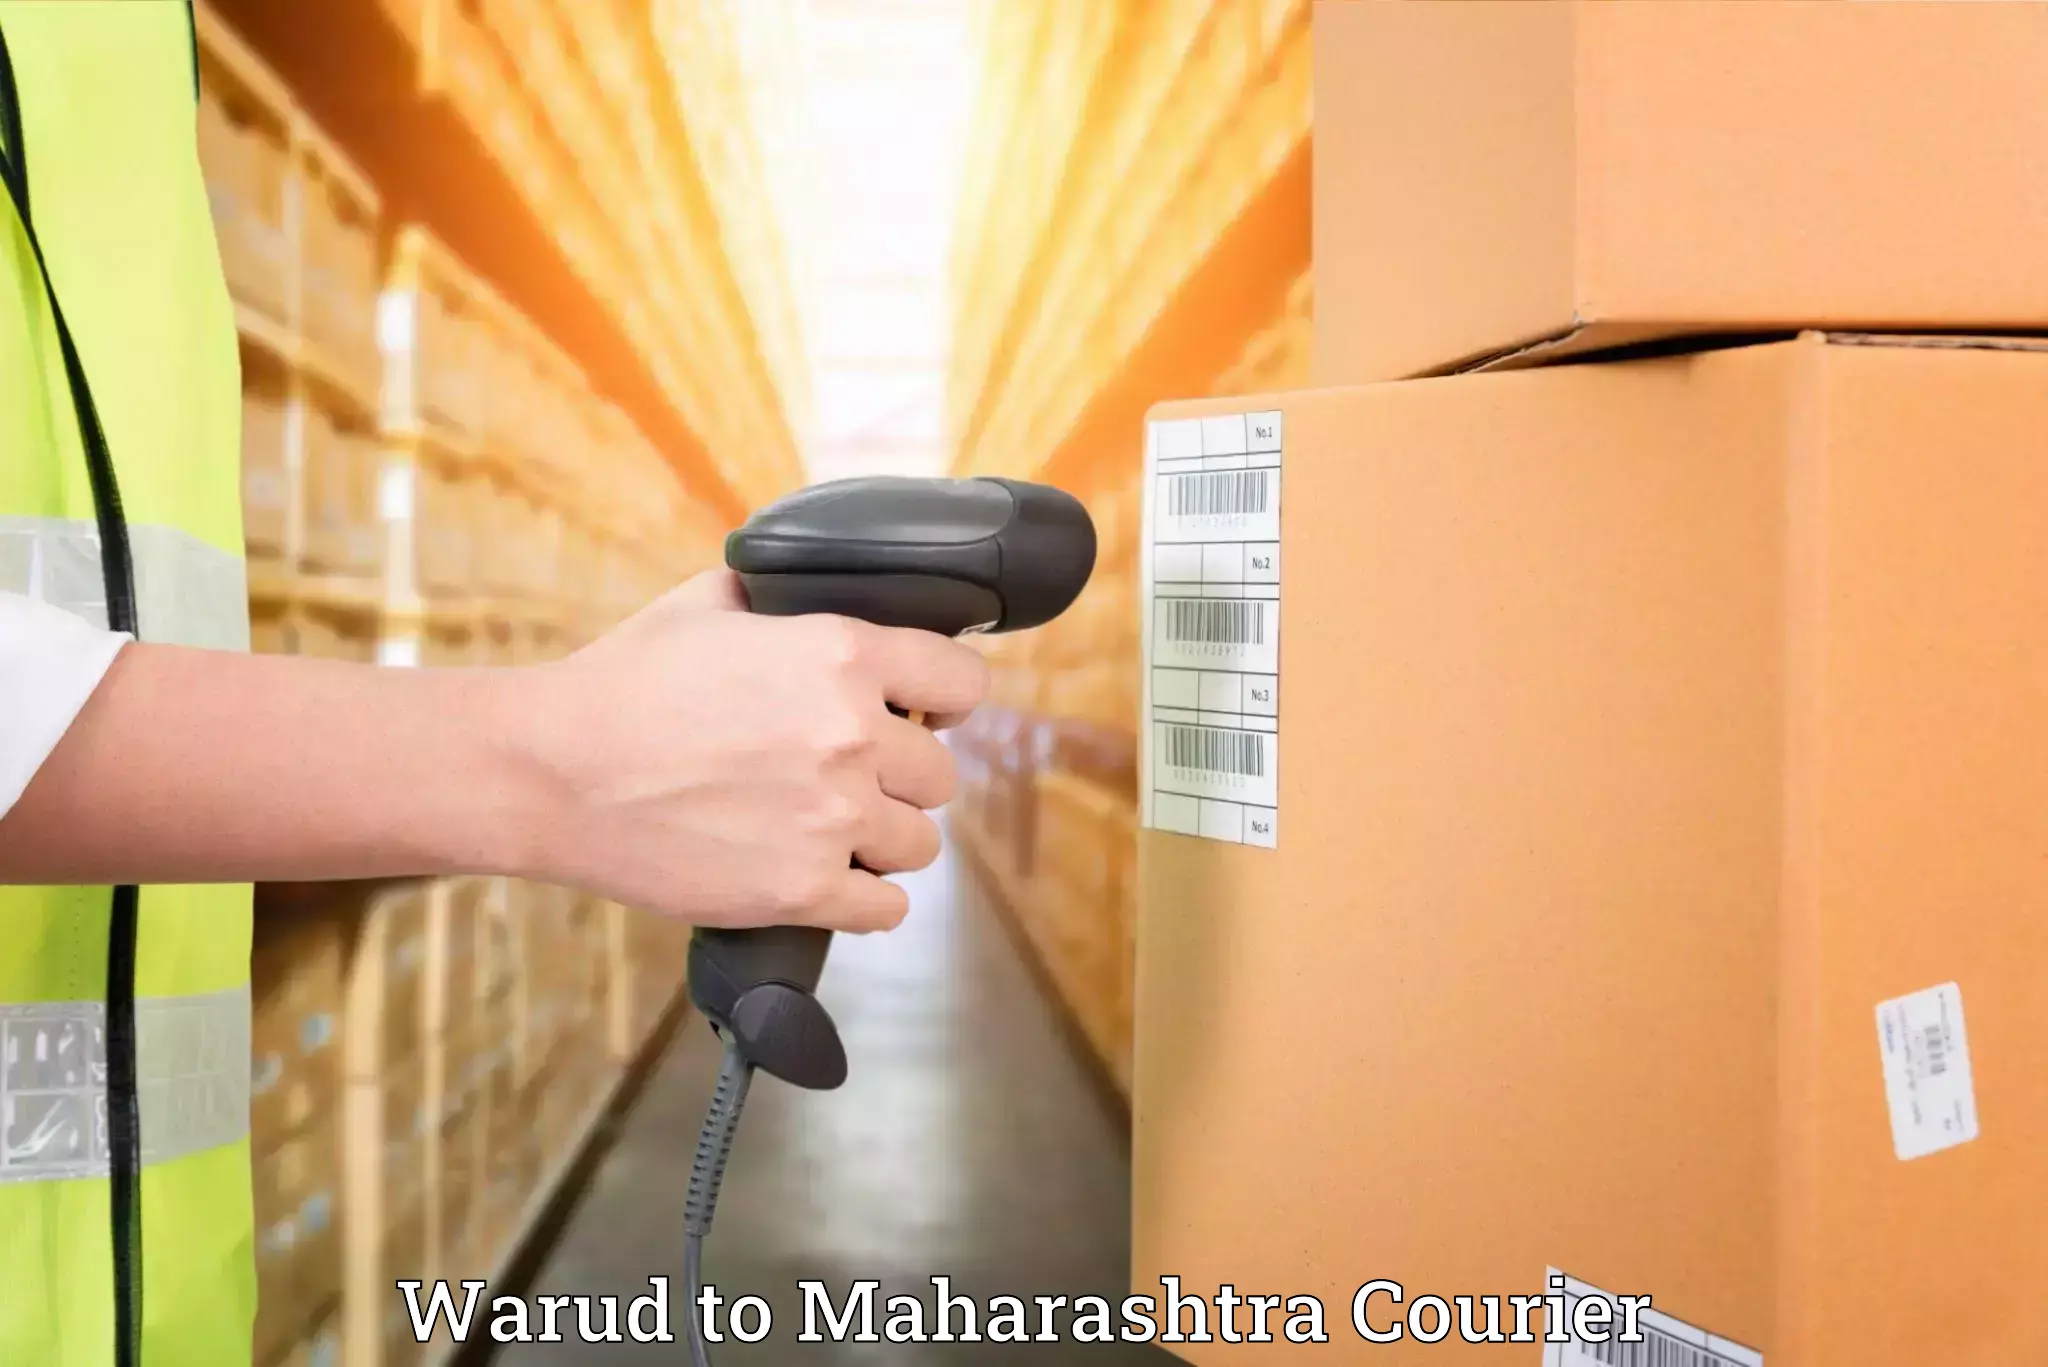 Specialized moving company in Warud to Nashik